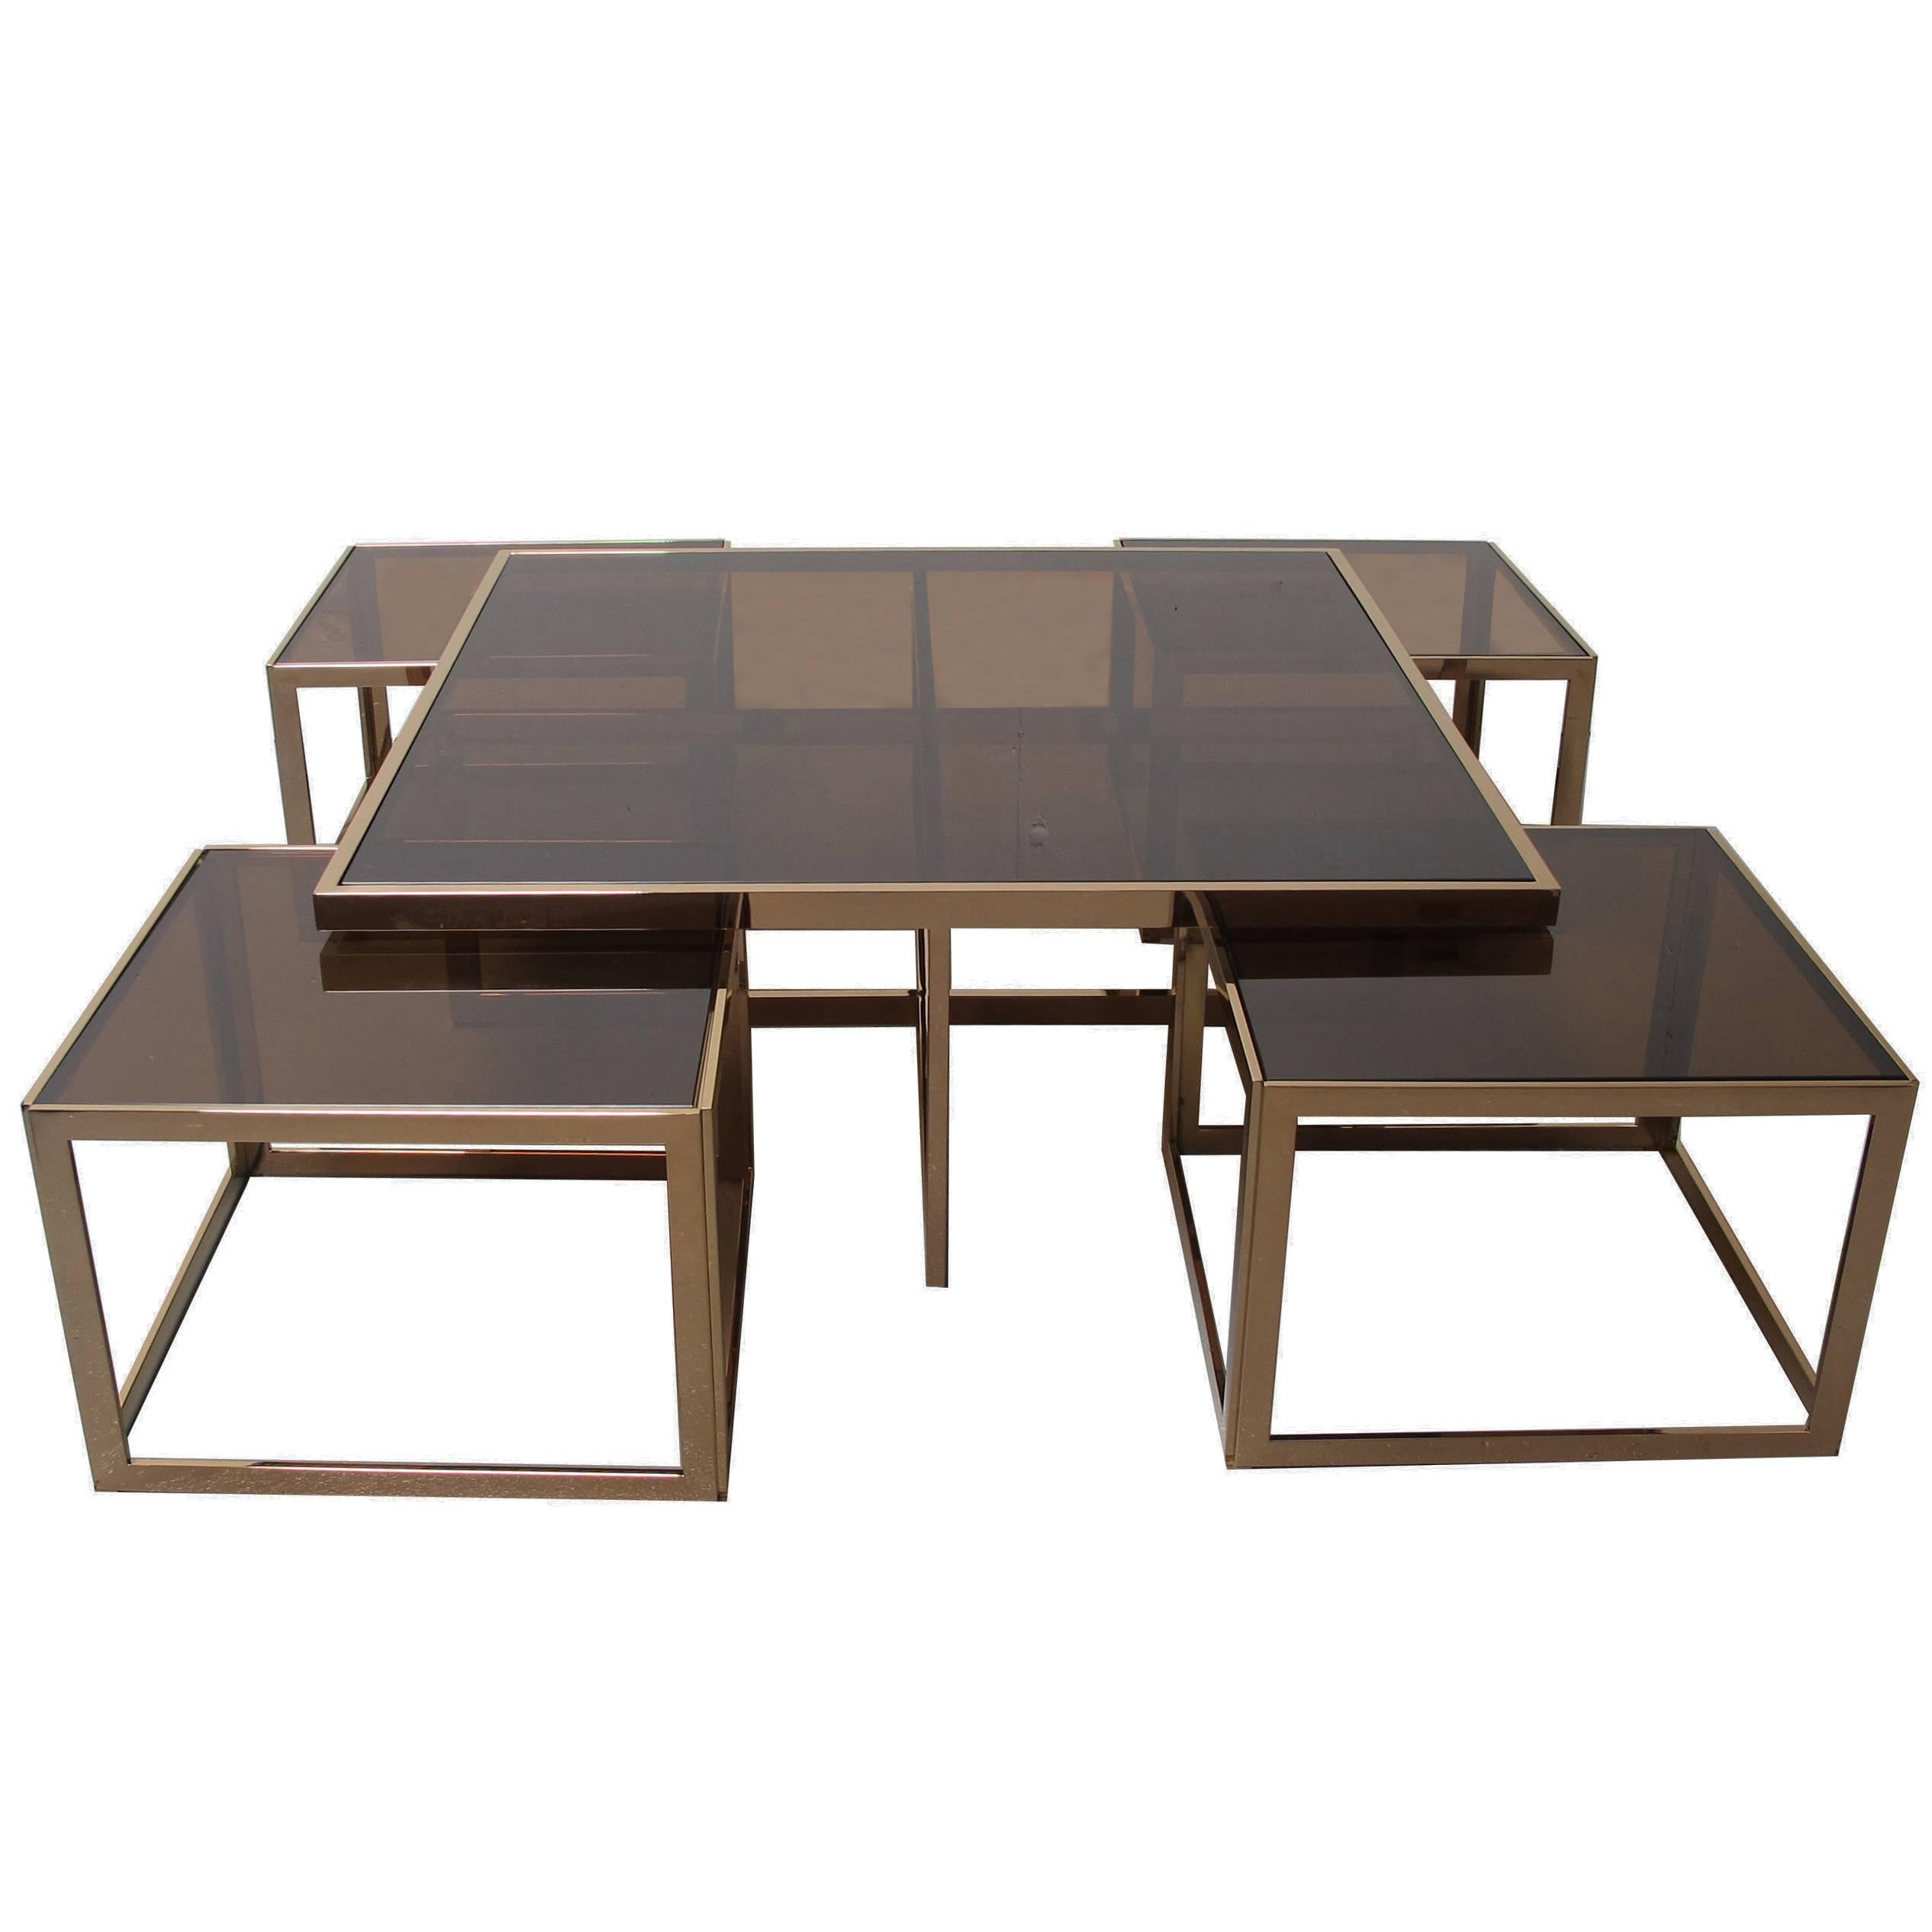 Modular Coffee Table For Sale